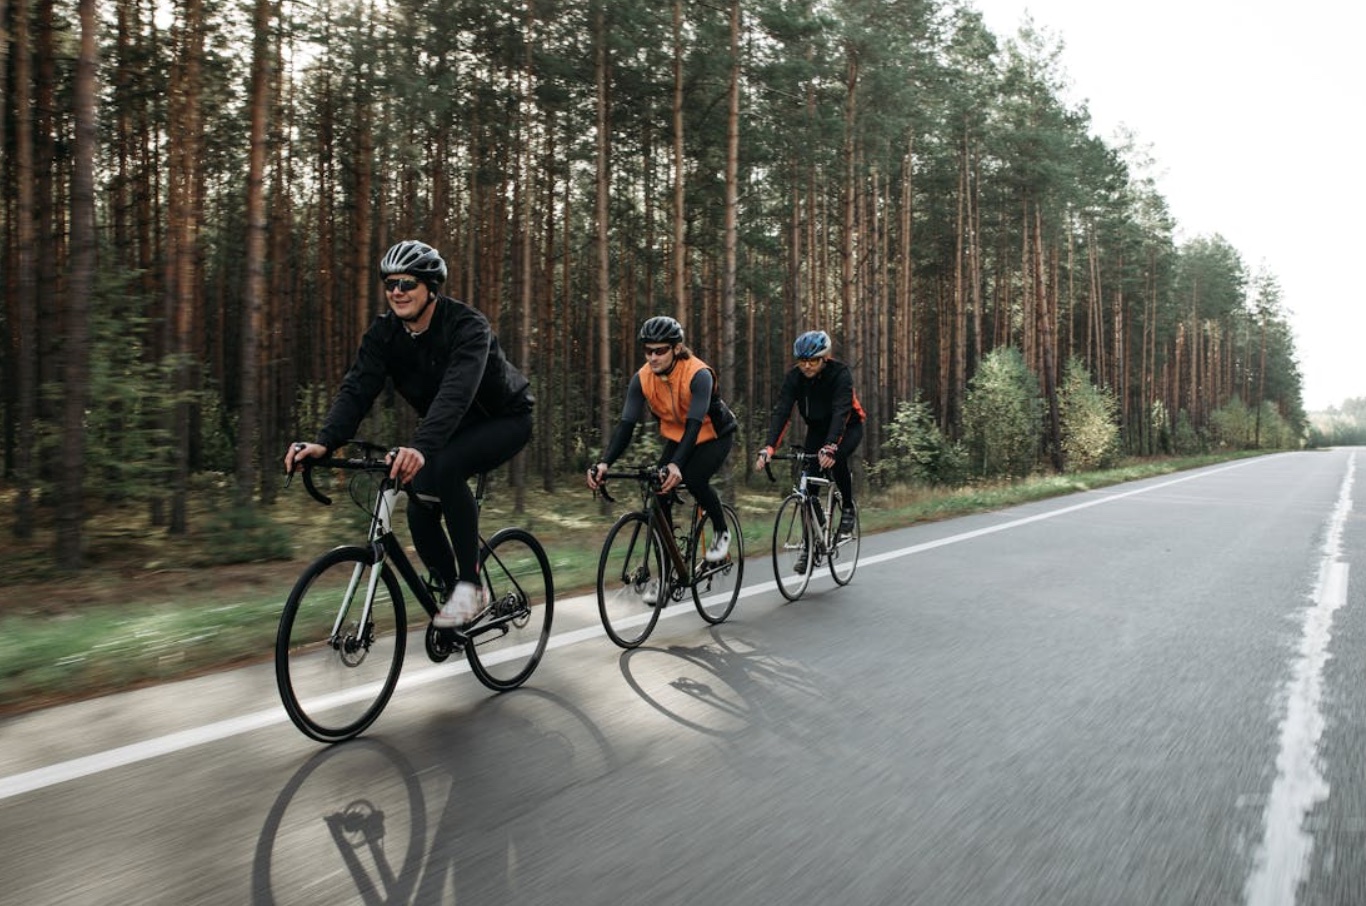 Three people biking on the road; image by Pavel Danilyuk, via Pexels.com.